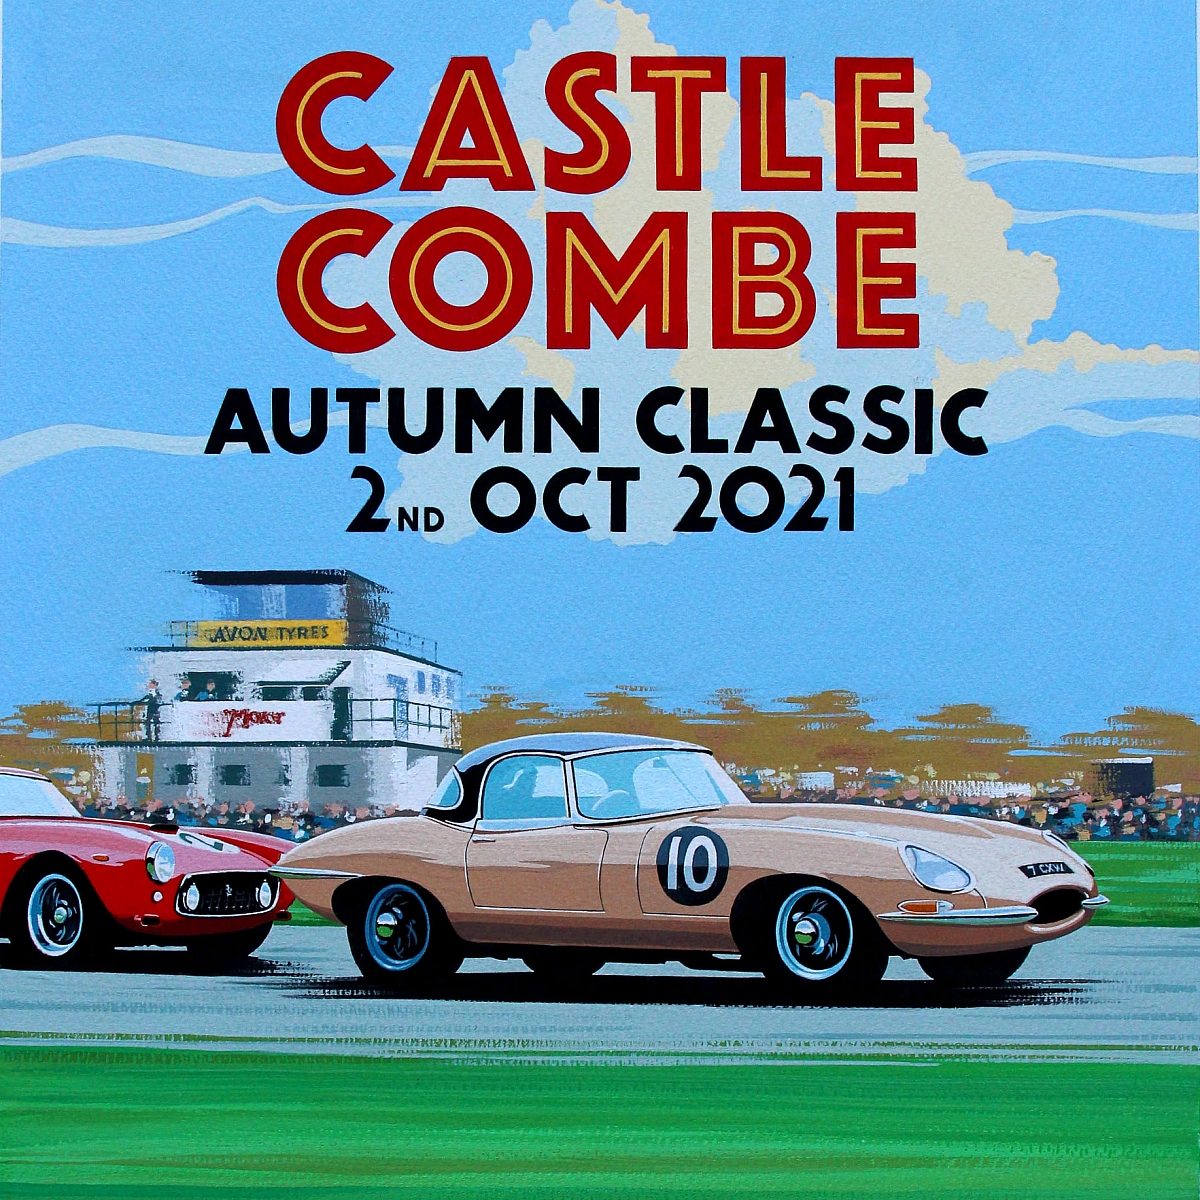 Brunel Group - Castle Combe Autumn Classic